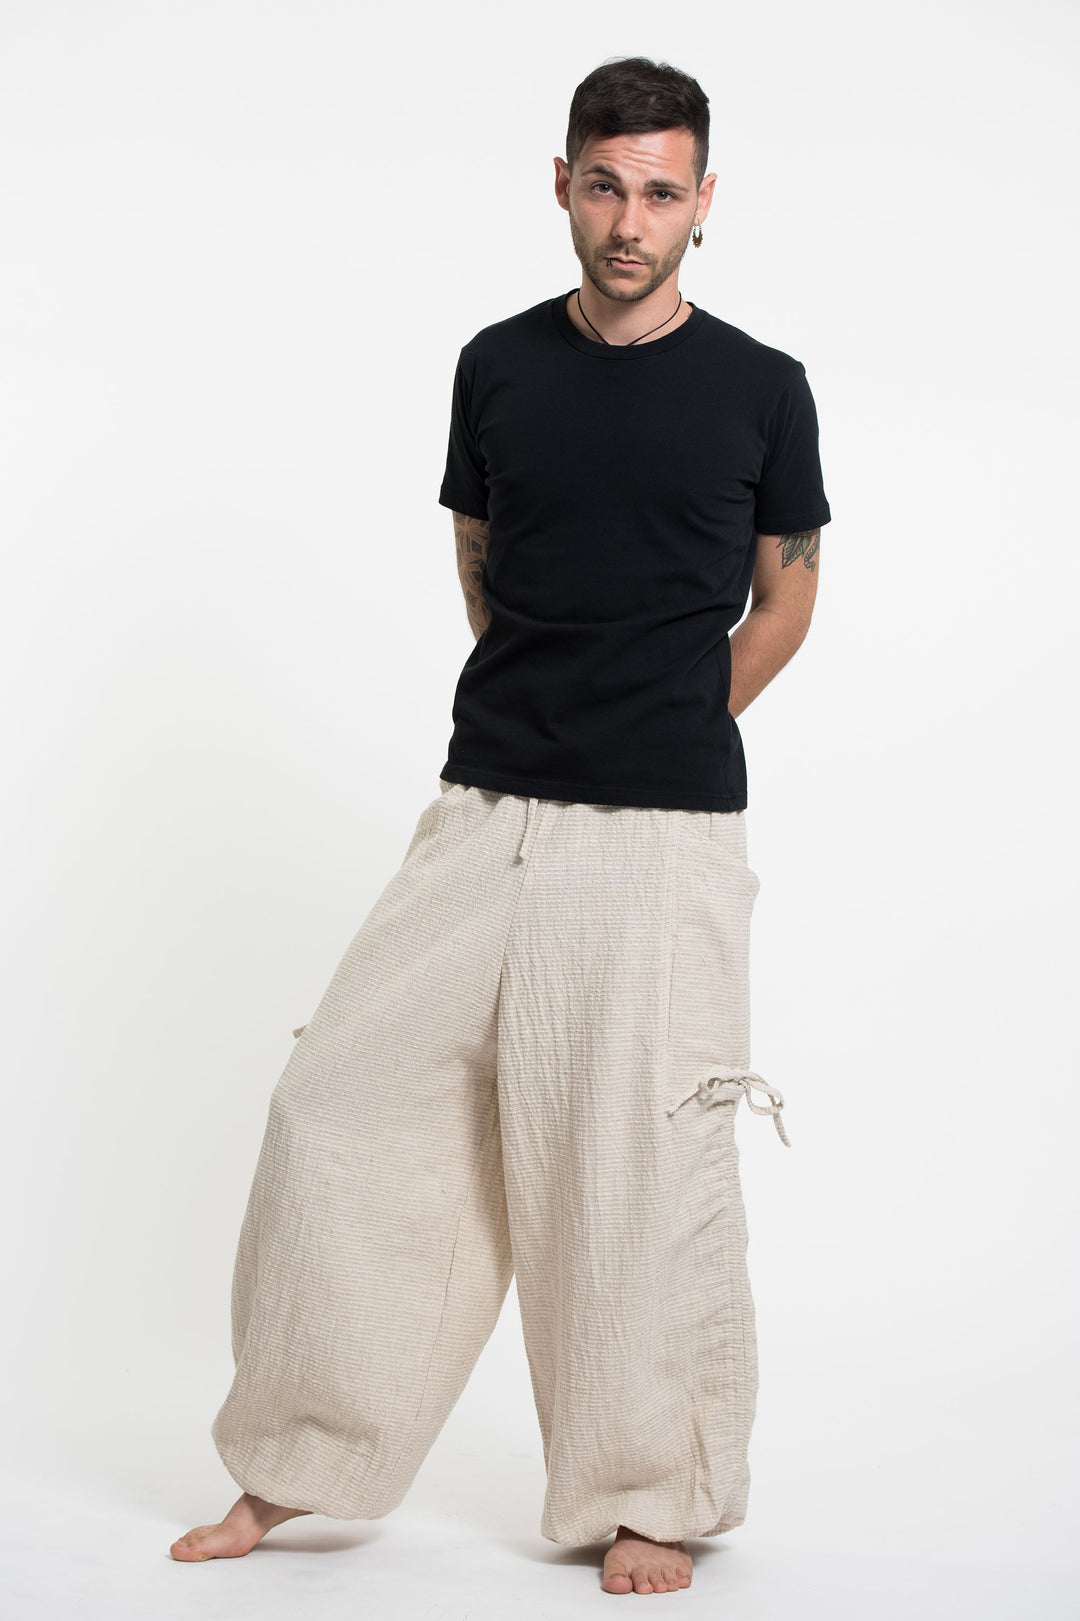 Men's Ribbed Hemp Cotton Linen Blend Pants in Natural – Harem Pants